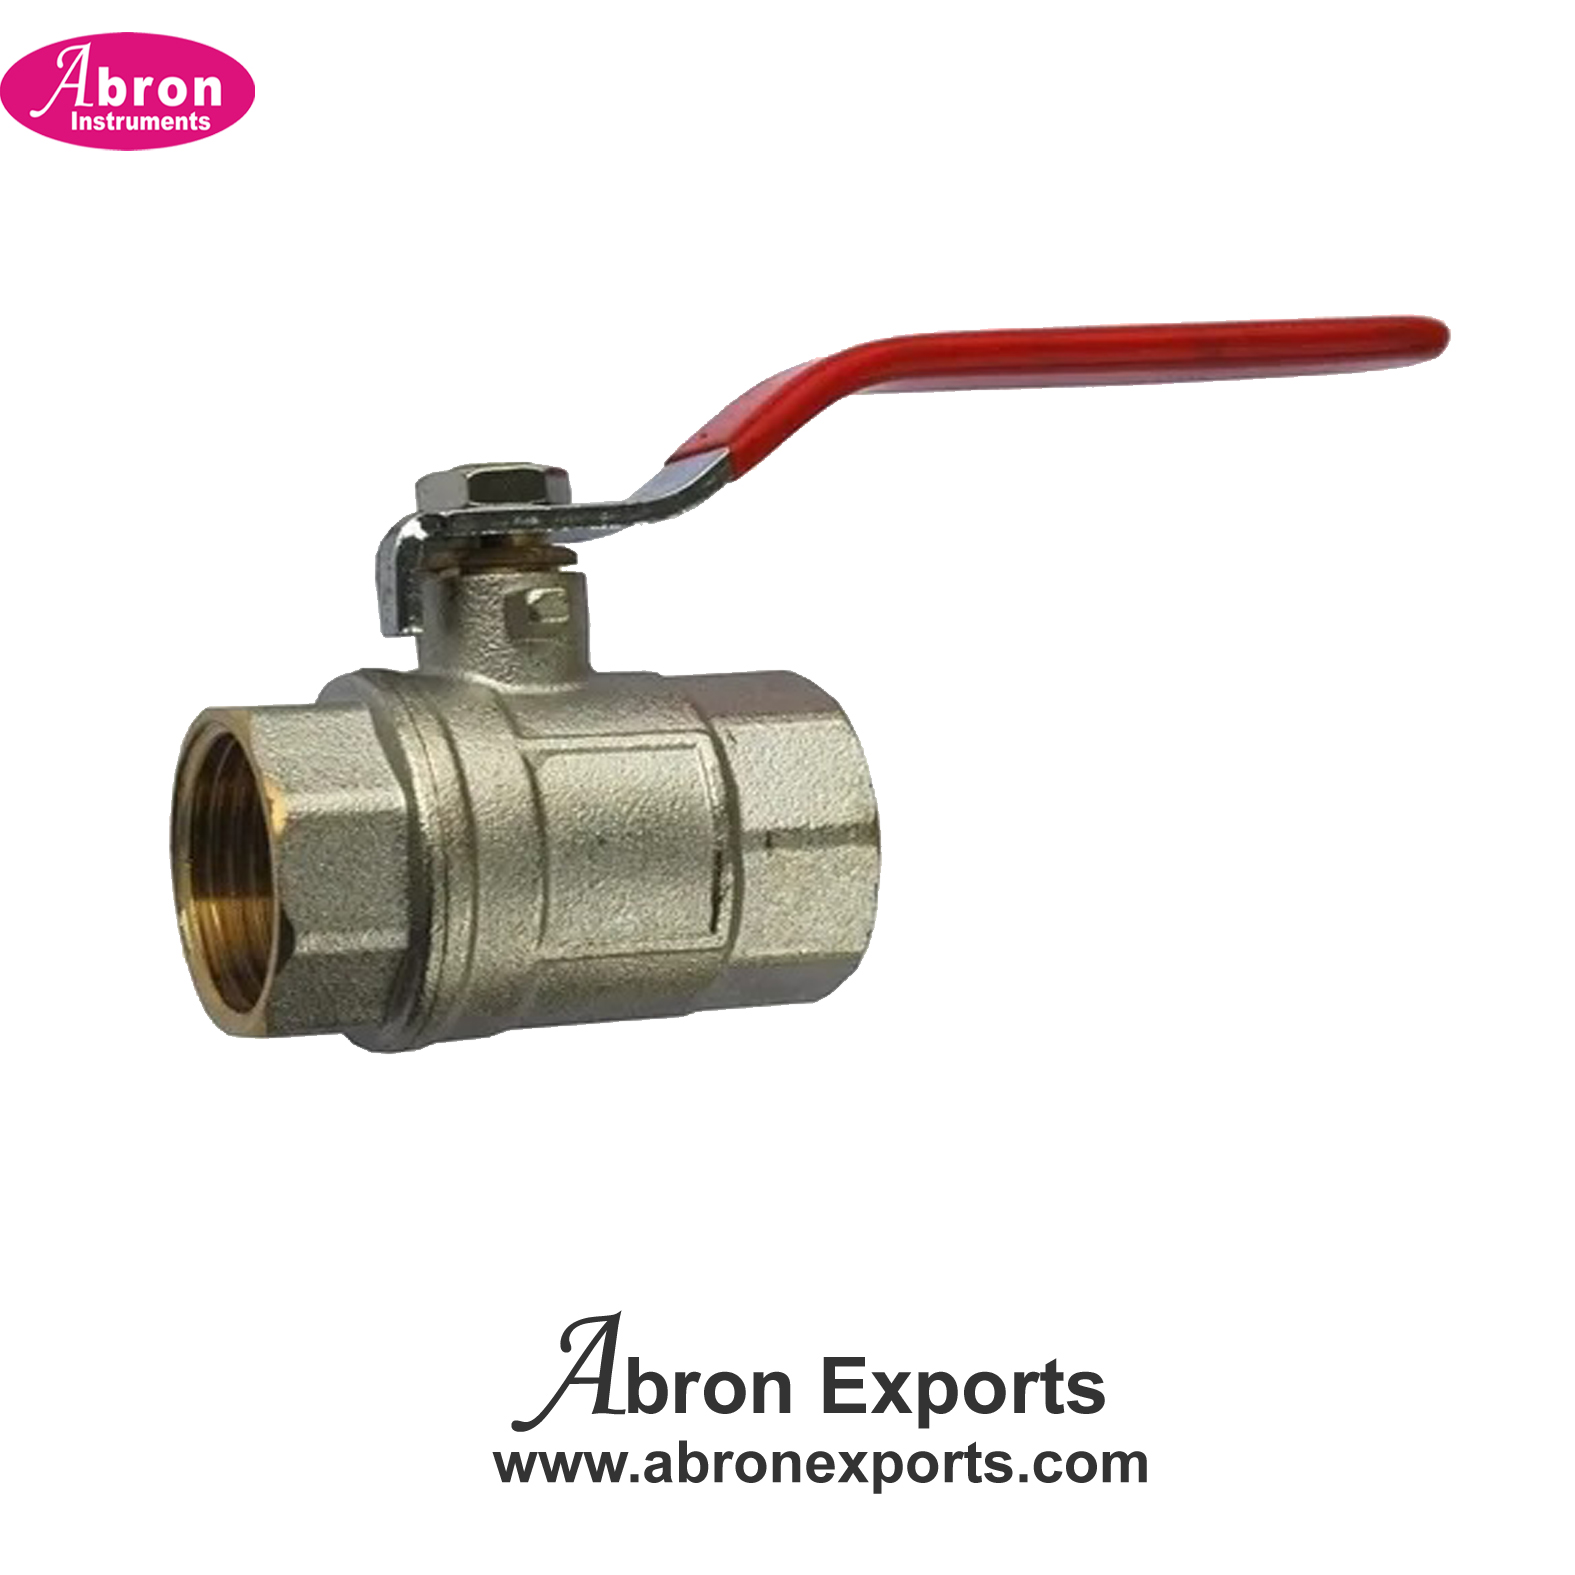 Medical oxygen air pipe line brass ball valve 54mm 1pc Abron ABM-1123BV54 